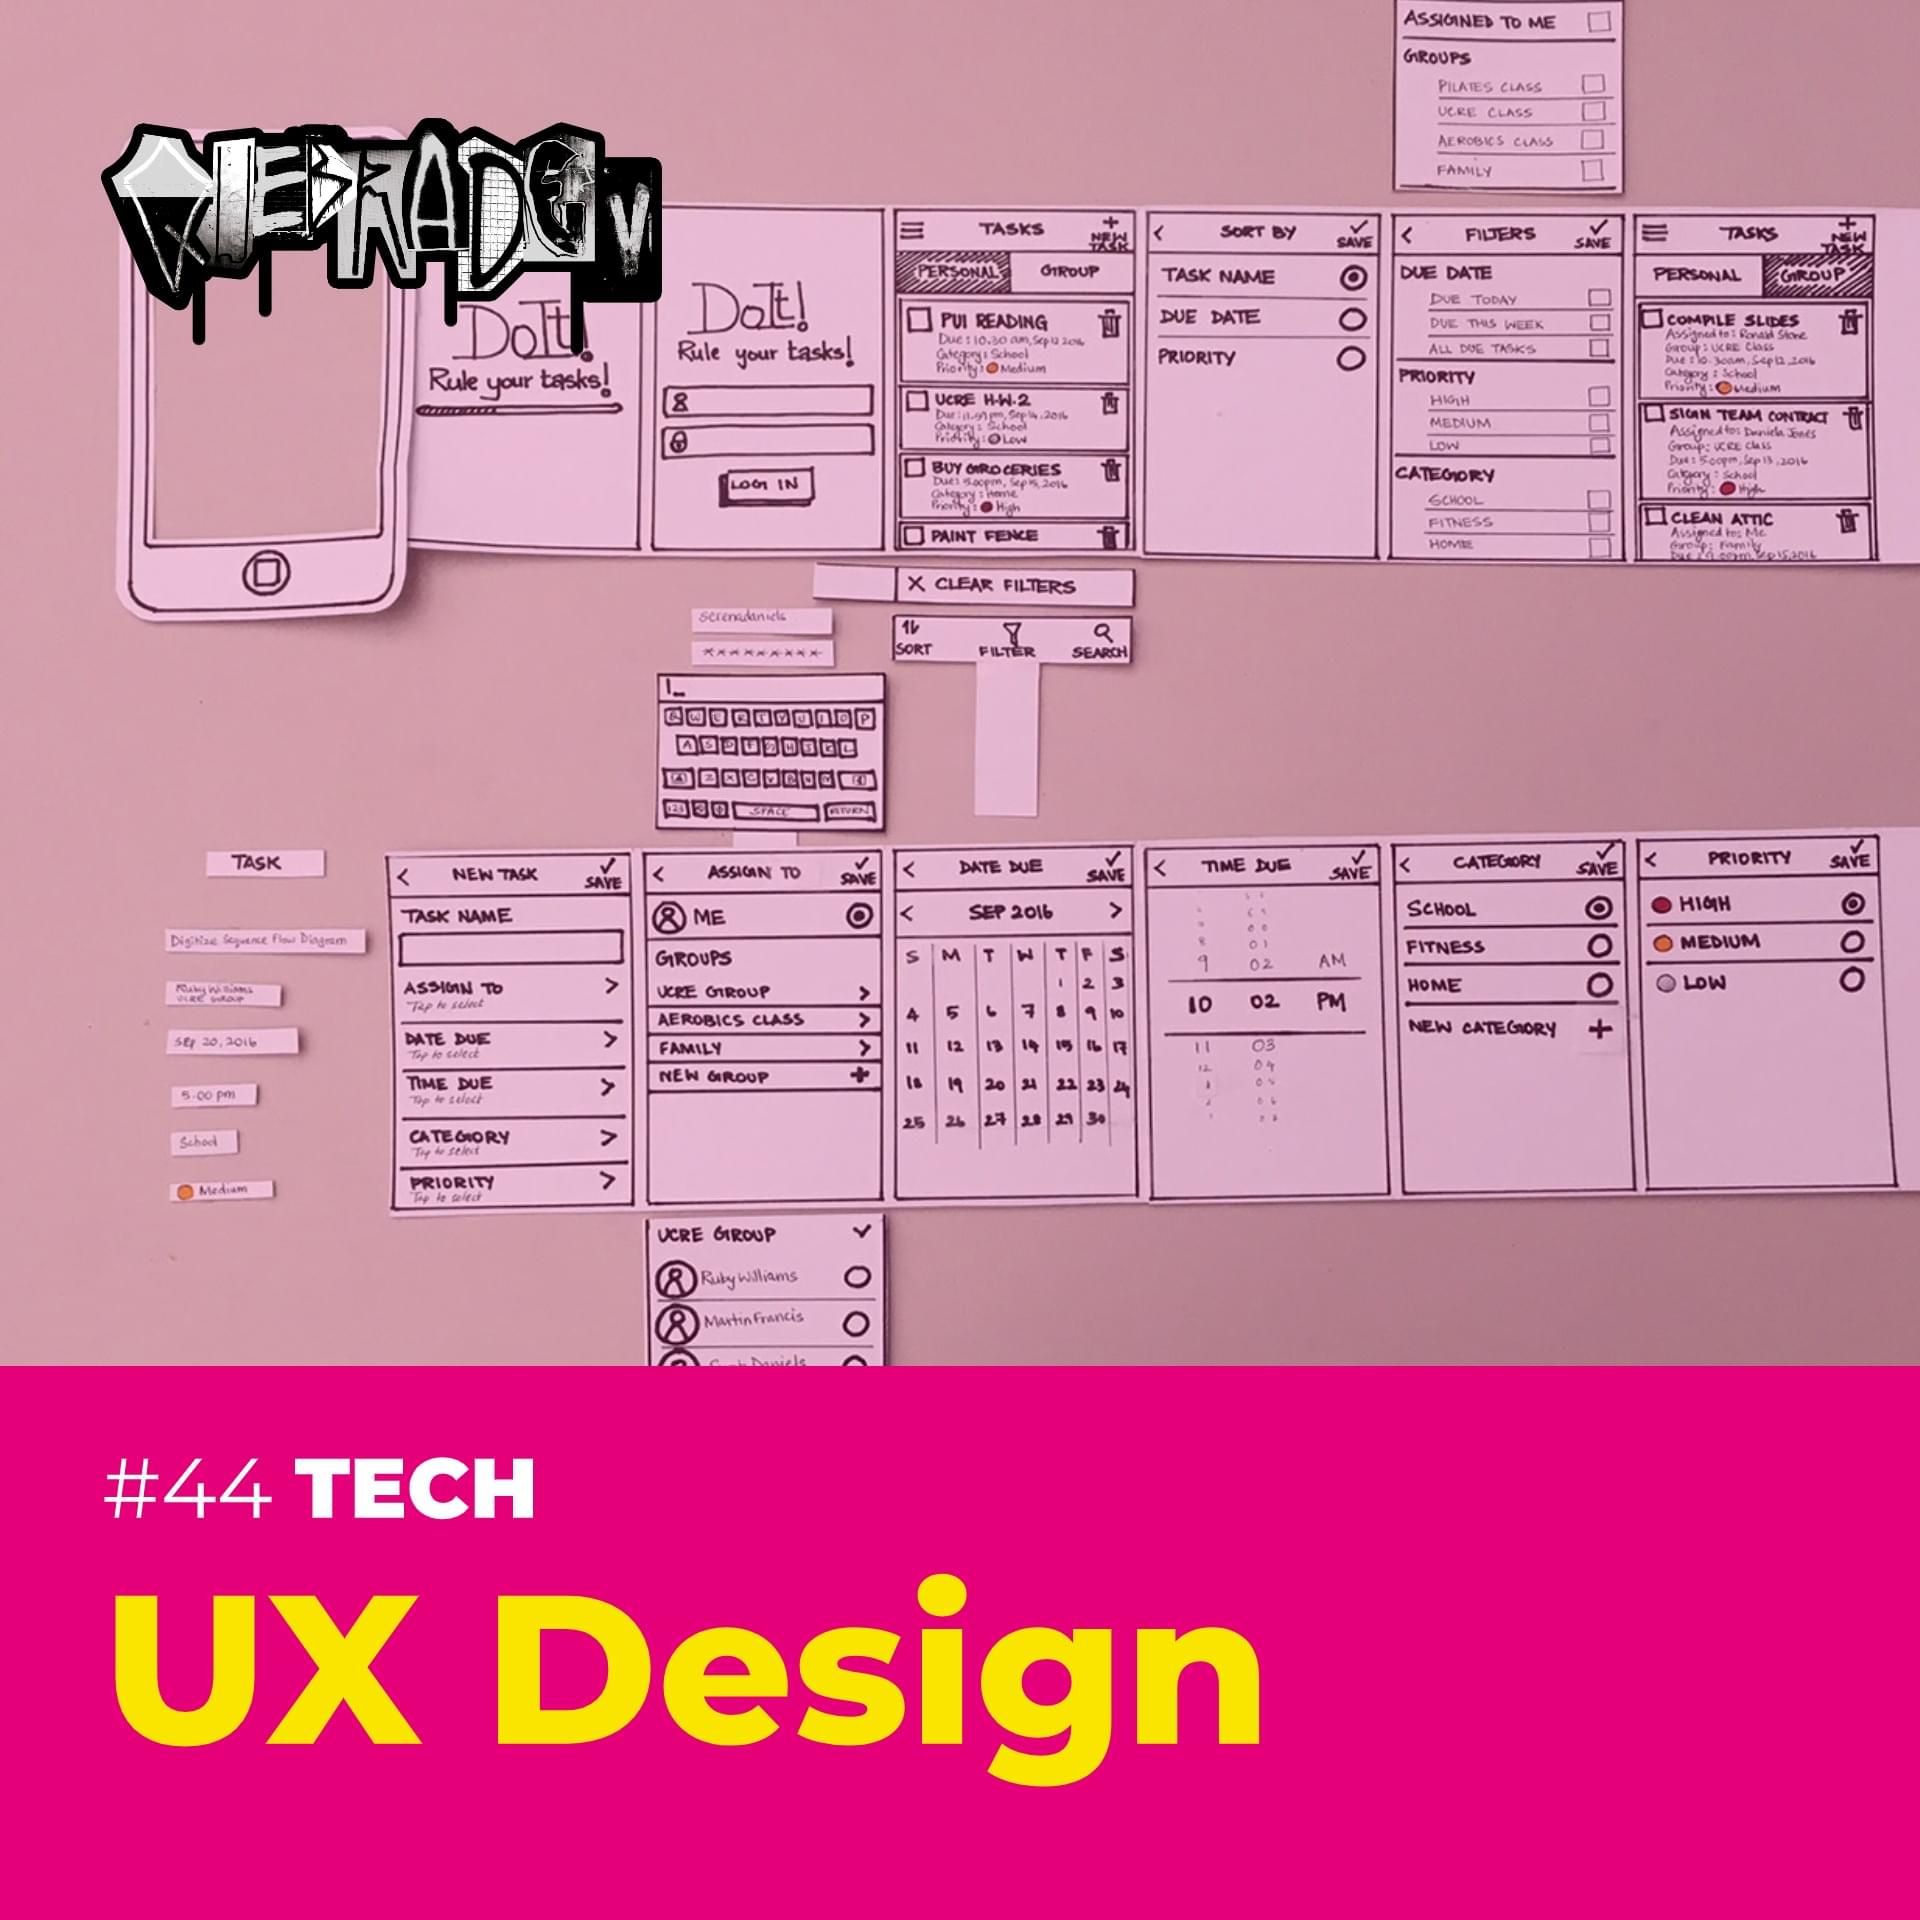 #44 - [Tech] UX Design Cover